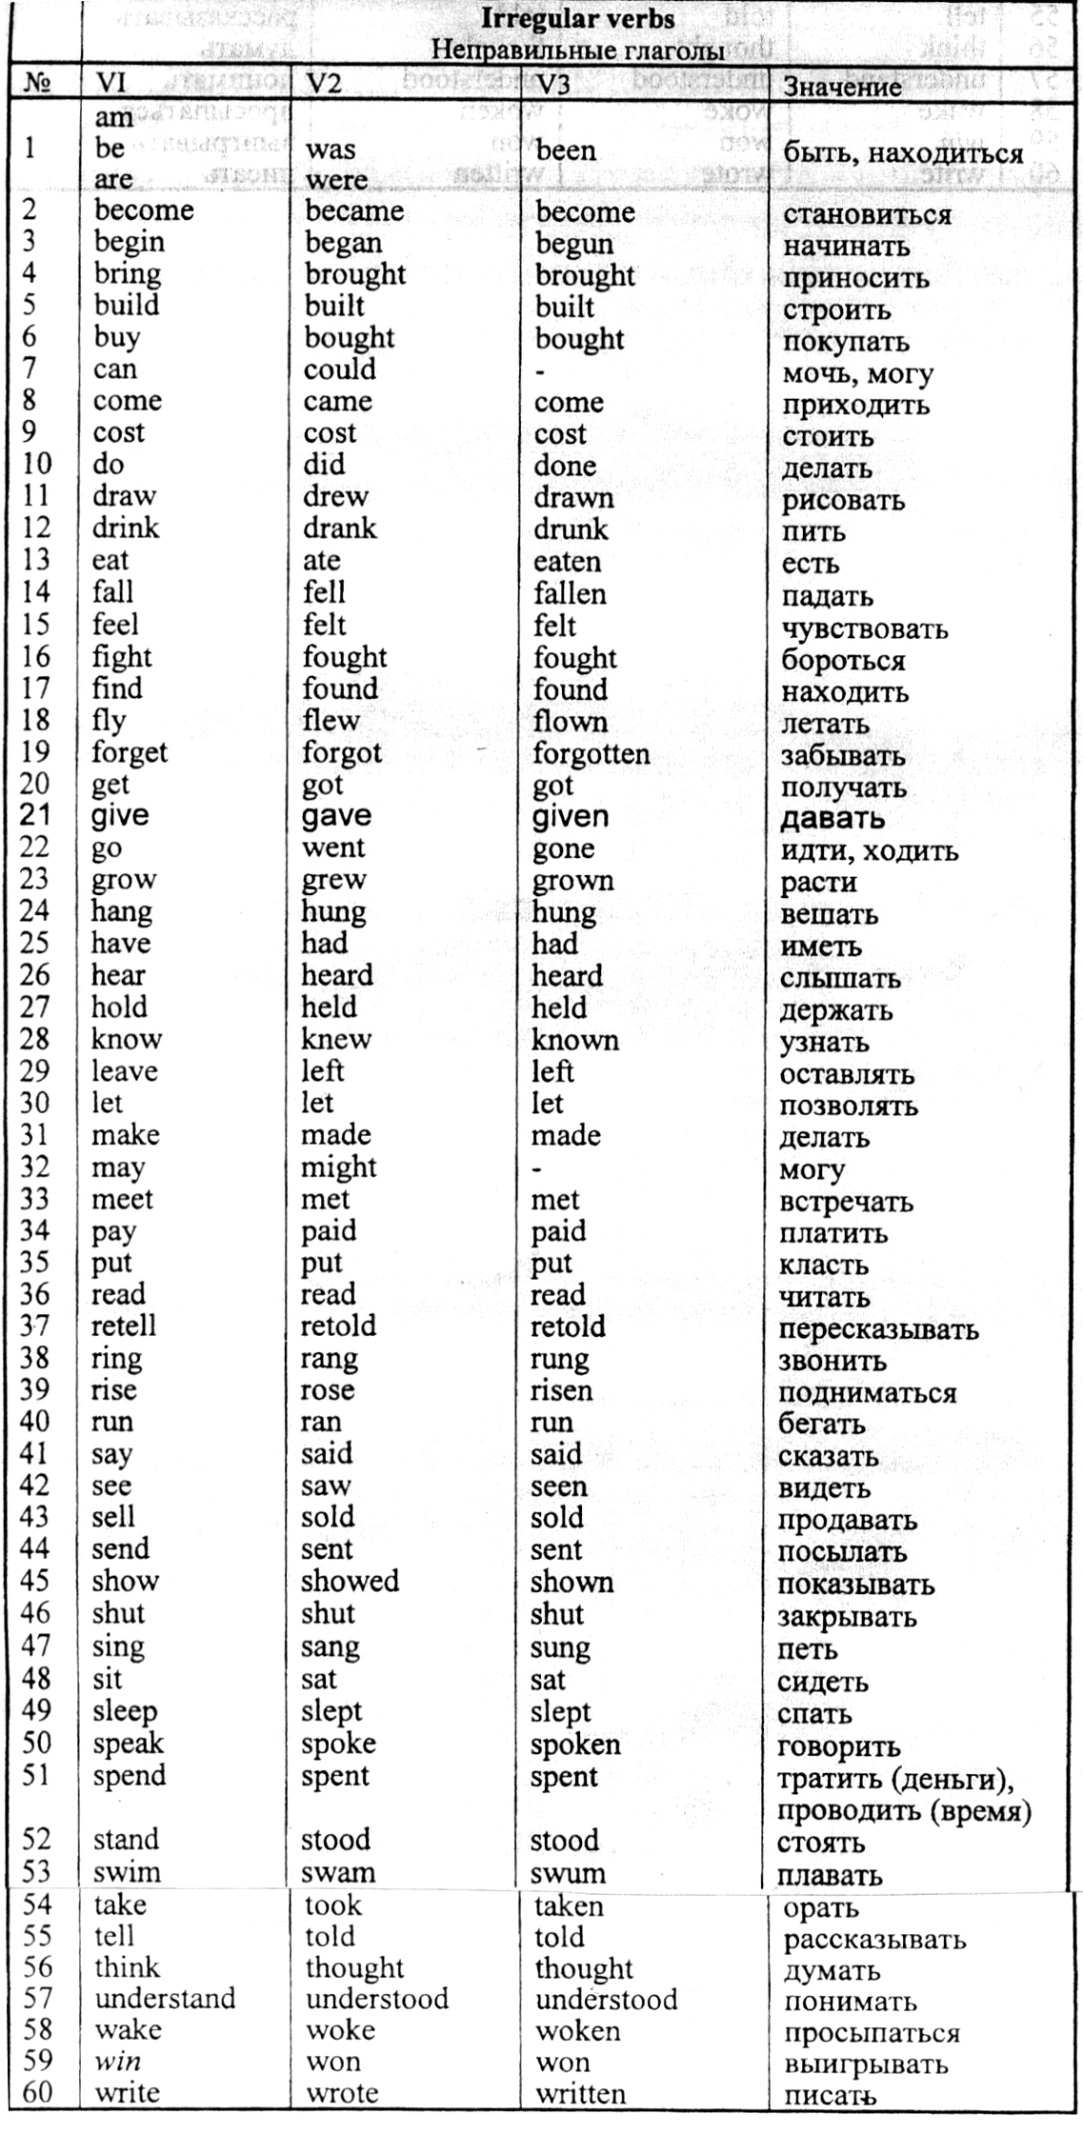 The irregular verbs in English - student2.ru